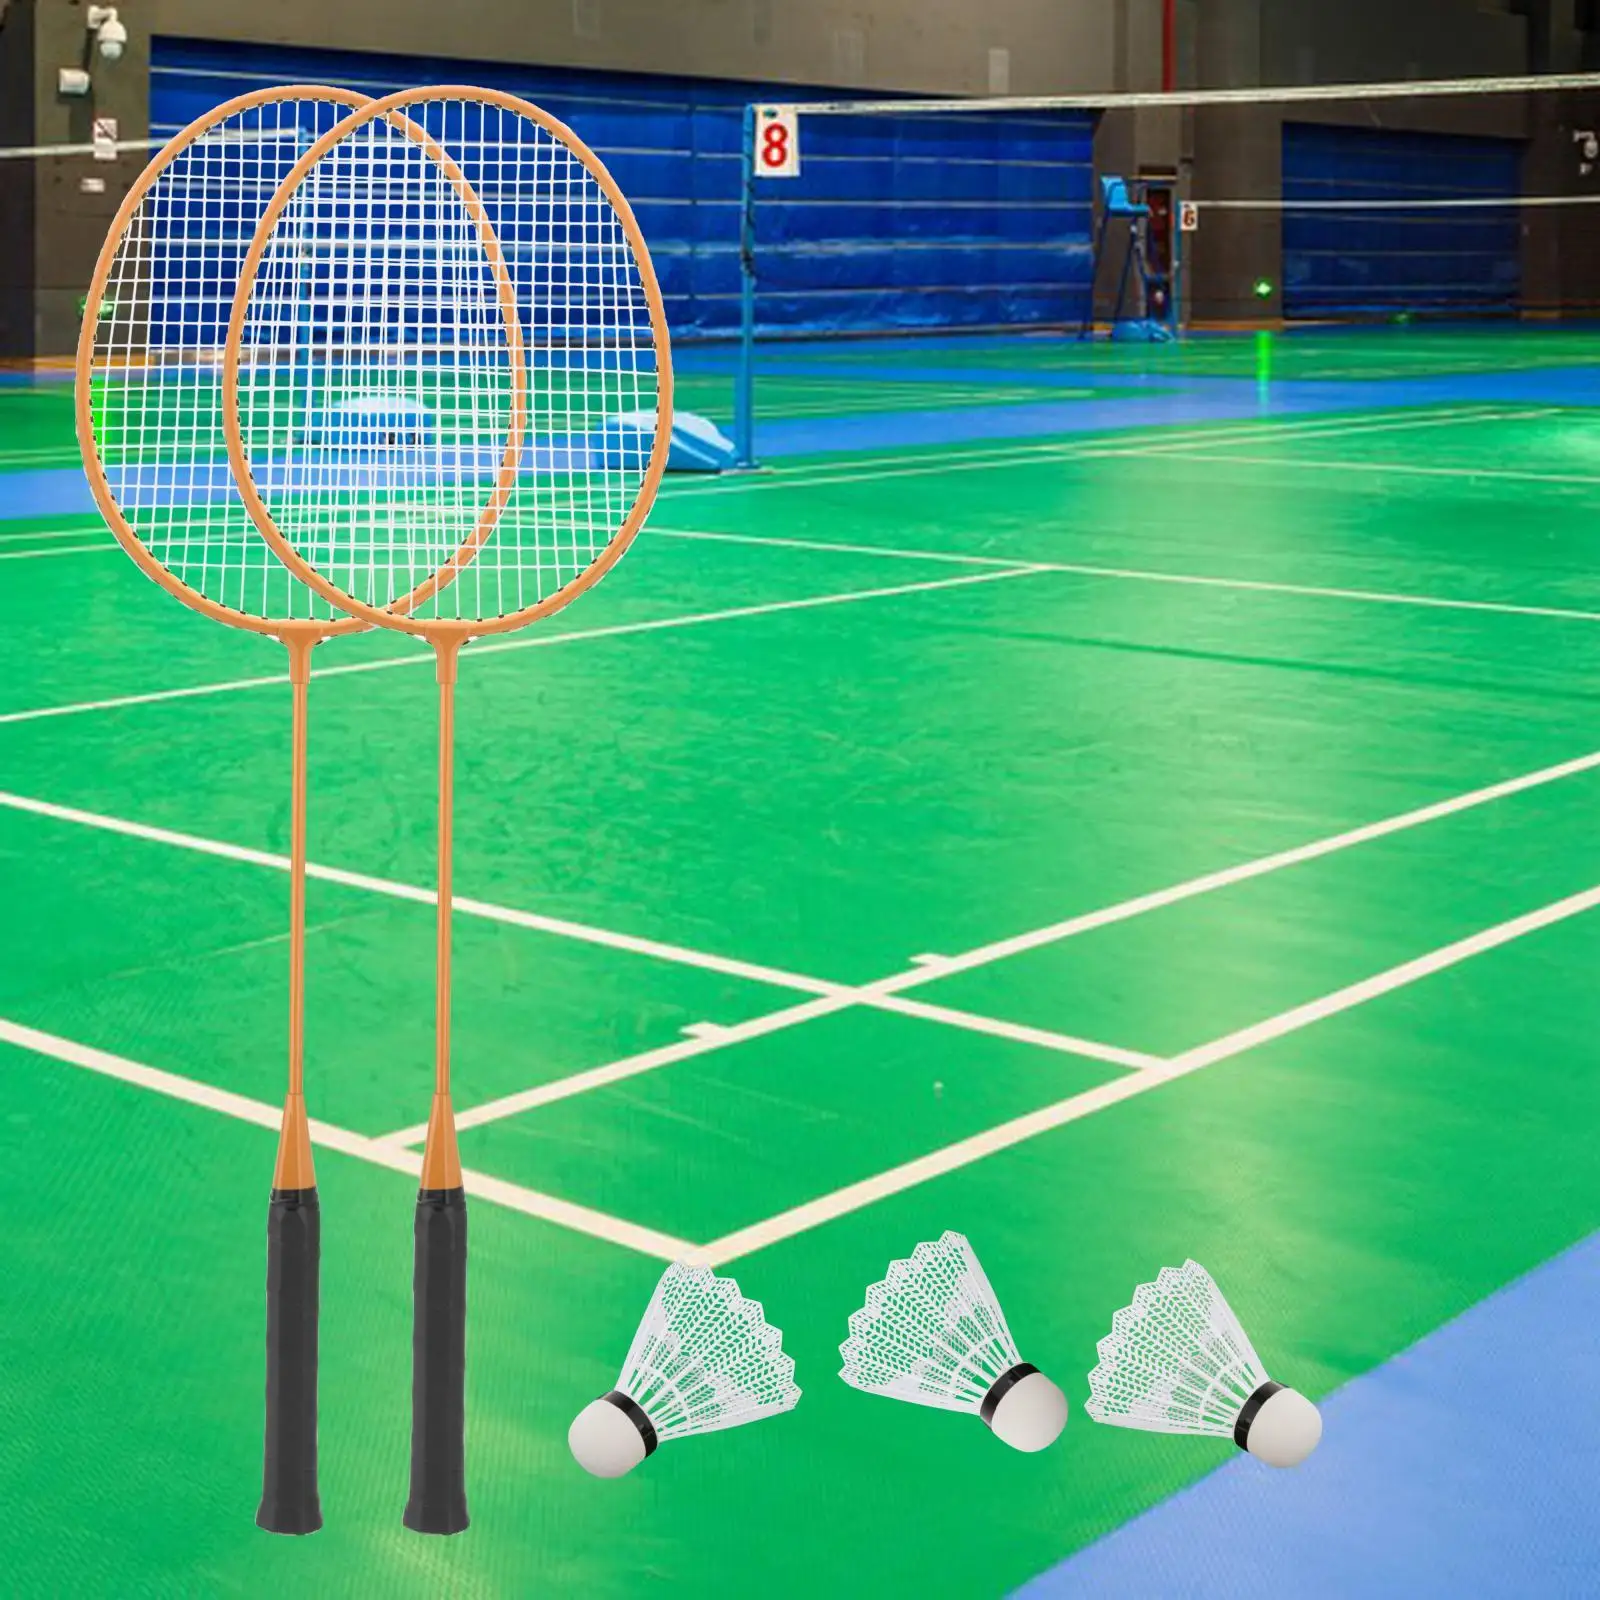 2Pcs Badminton Rackets with 3 Nylon Balls Badminton Equipment Badminton Racquets for Practice Playing Backyard Games Beach Lawn